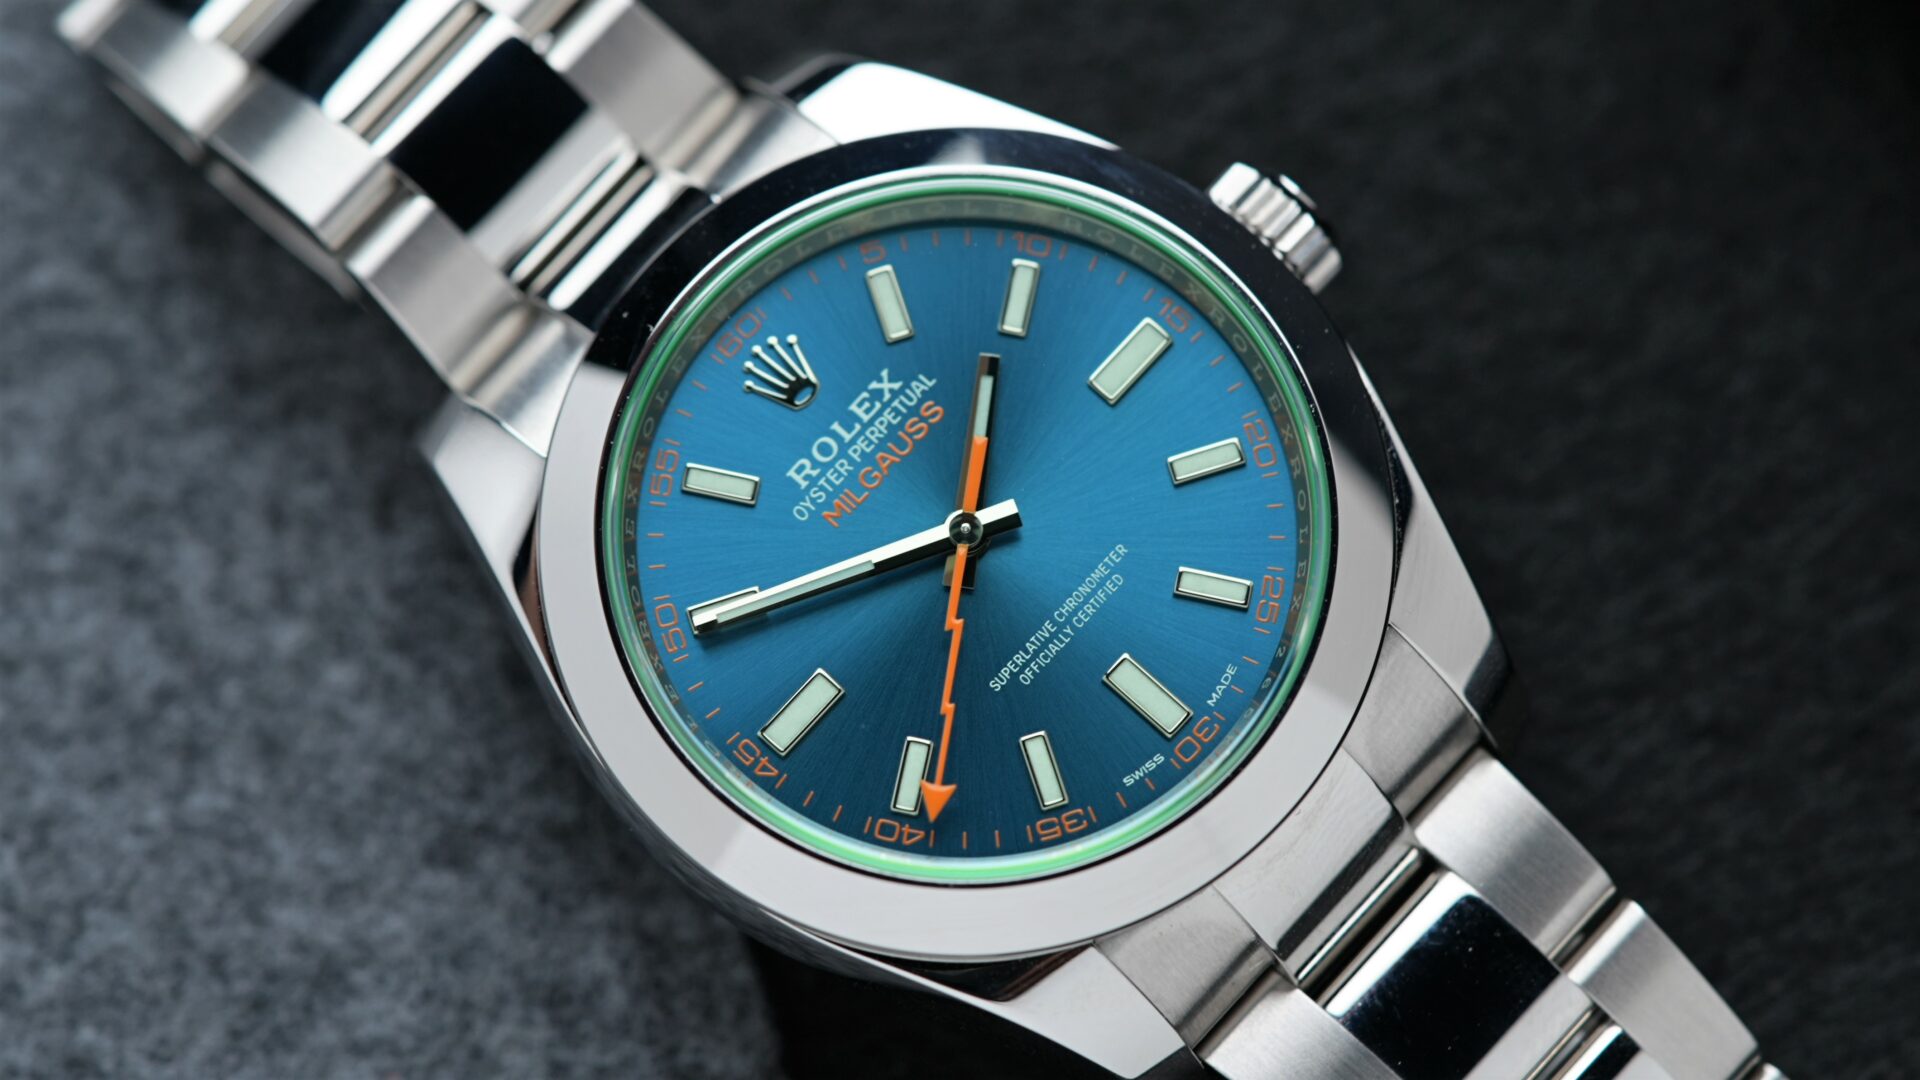 Rolex Milgauss Z Blue UNWORN 116400GV wristwatch displayed closeup.